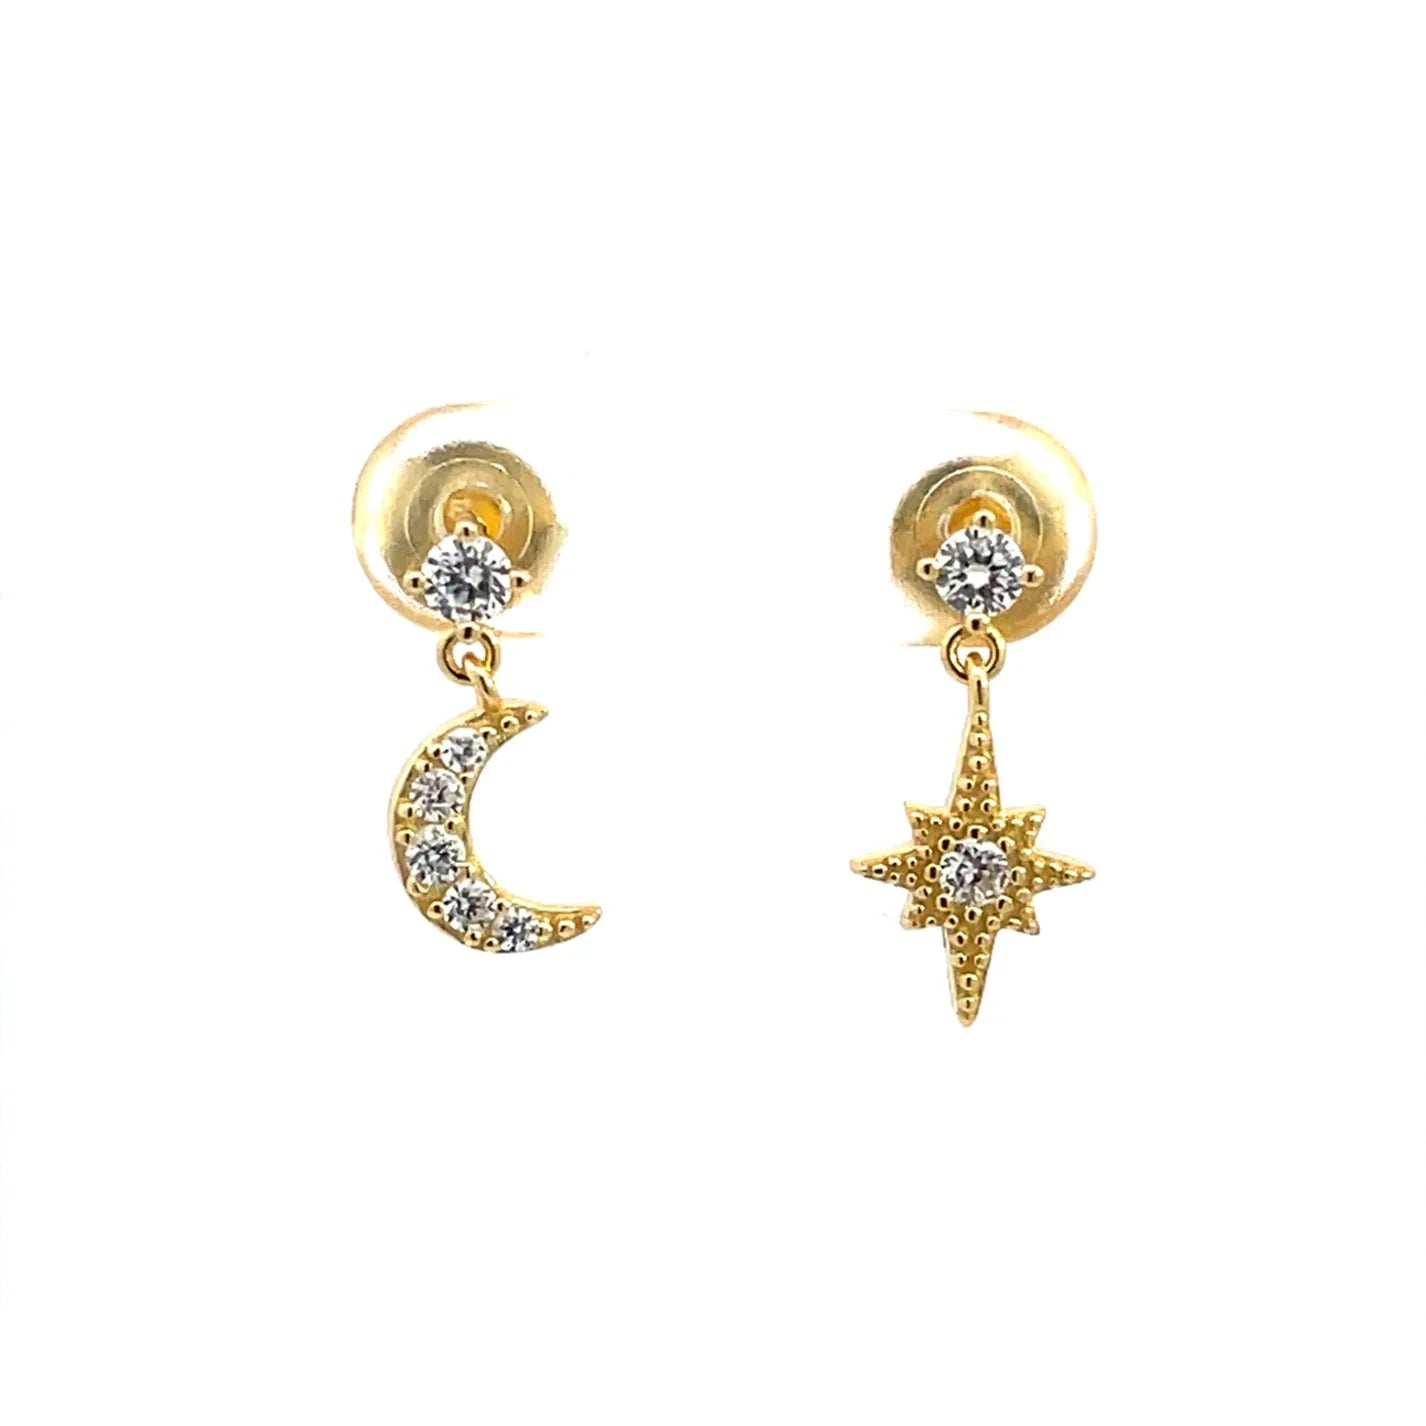 Moon & Star Stud Earrings